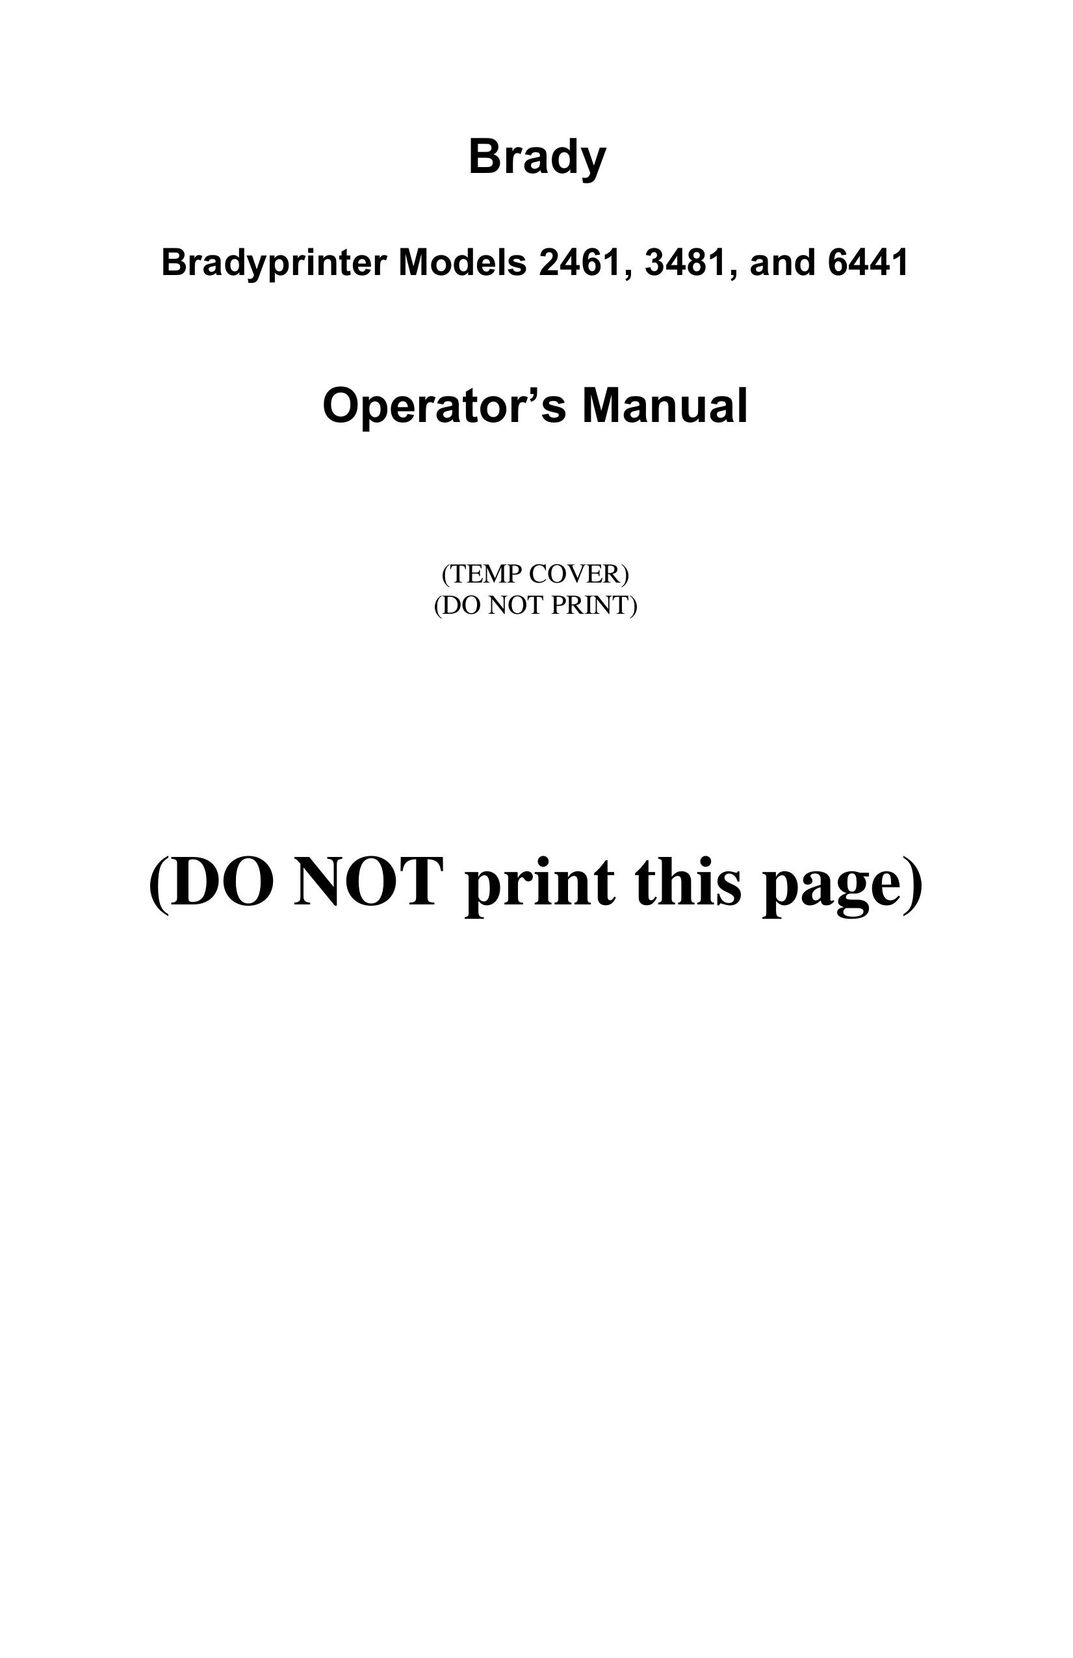 Brady 3481 Printer User Manual